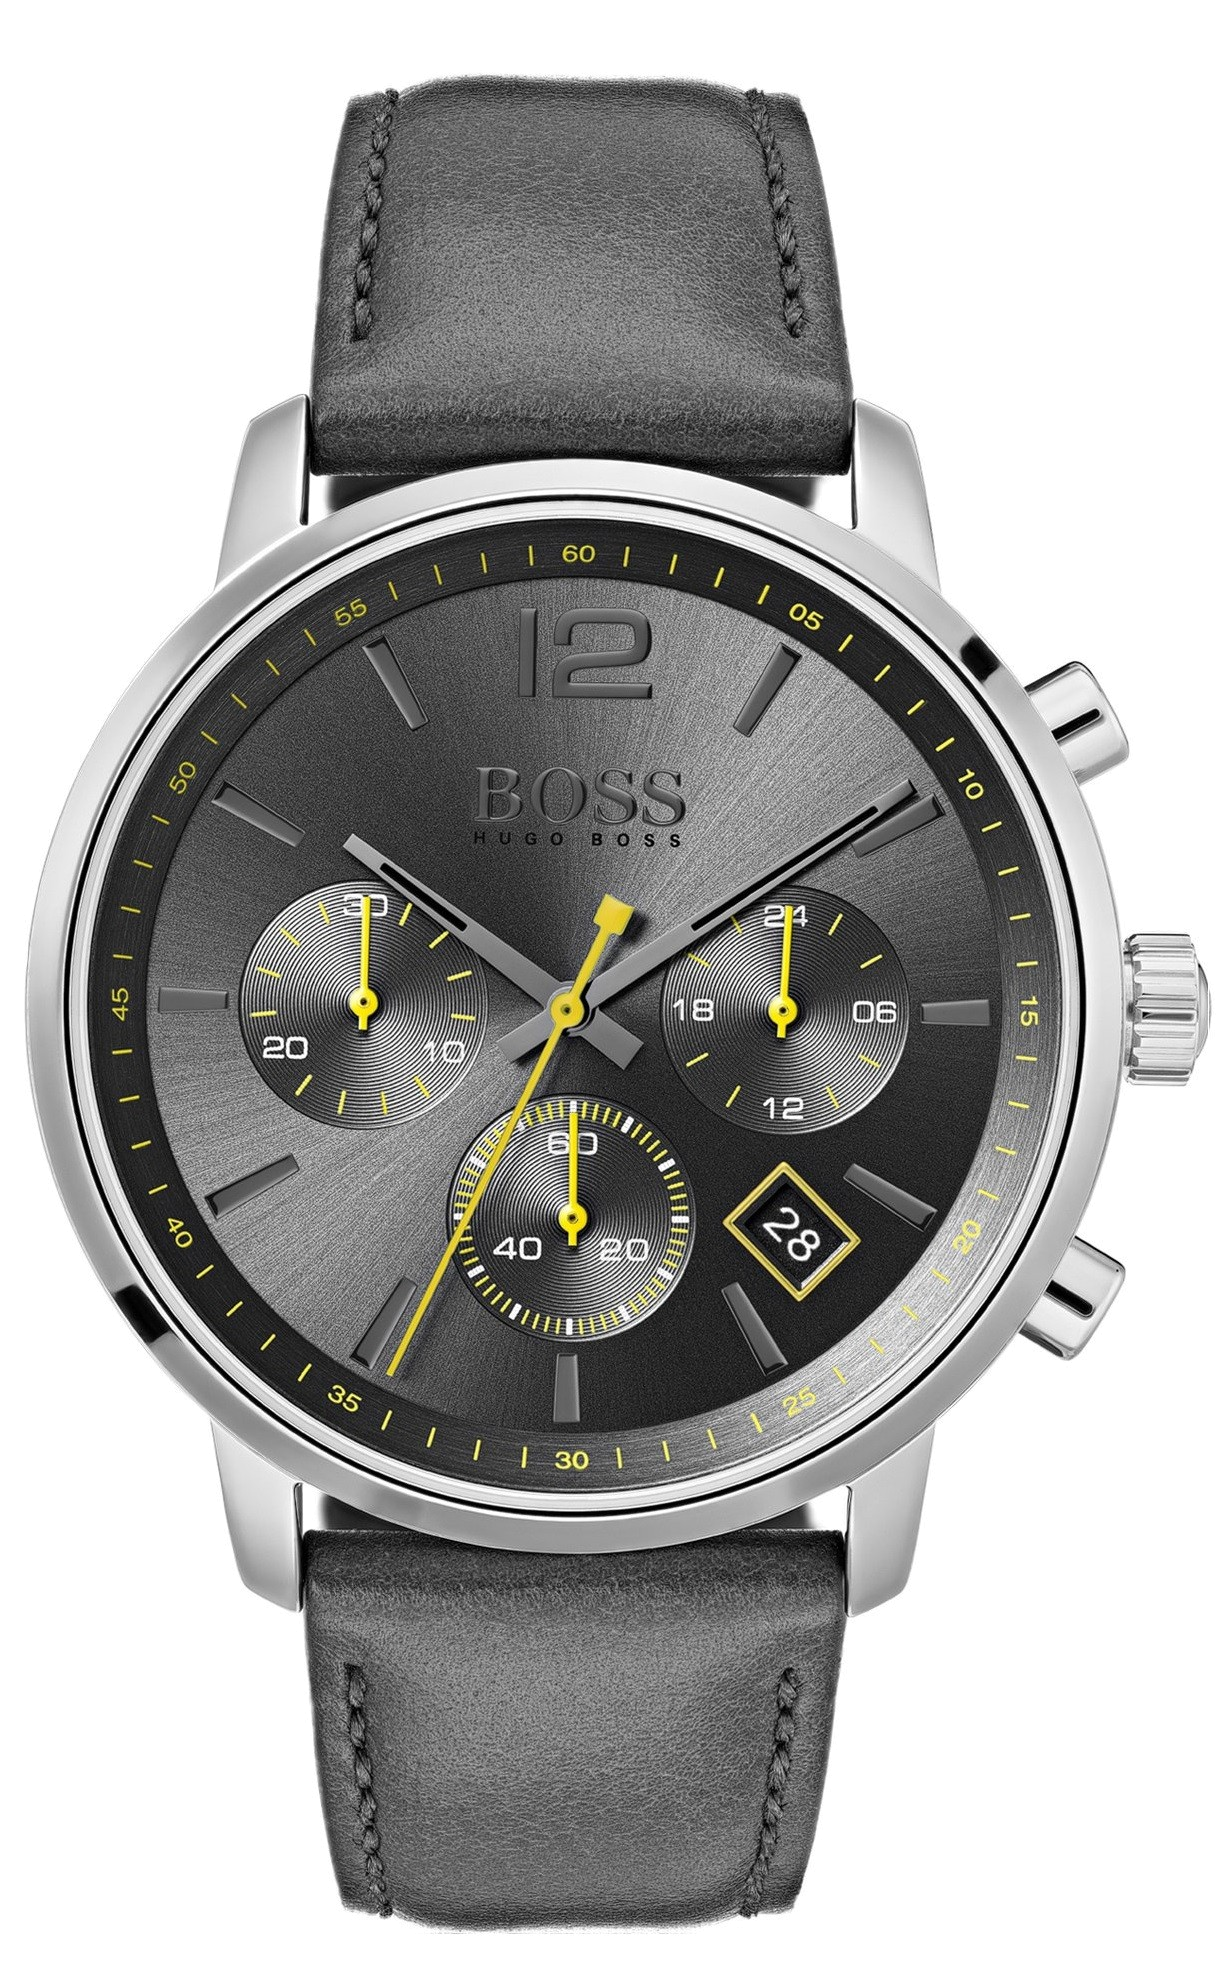 Наручные часы hugo. Часы attitude Automatic. Boss hb1513658. Мужские наручные часы Hugo Boss. Часы Хуго босс мужские.